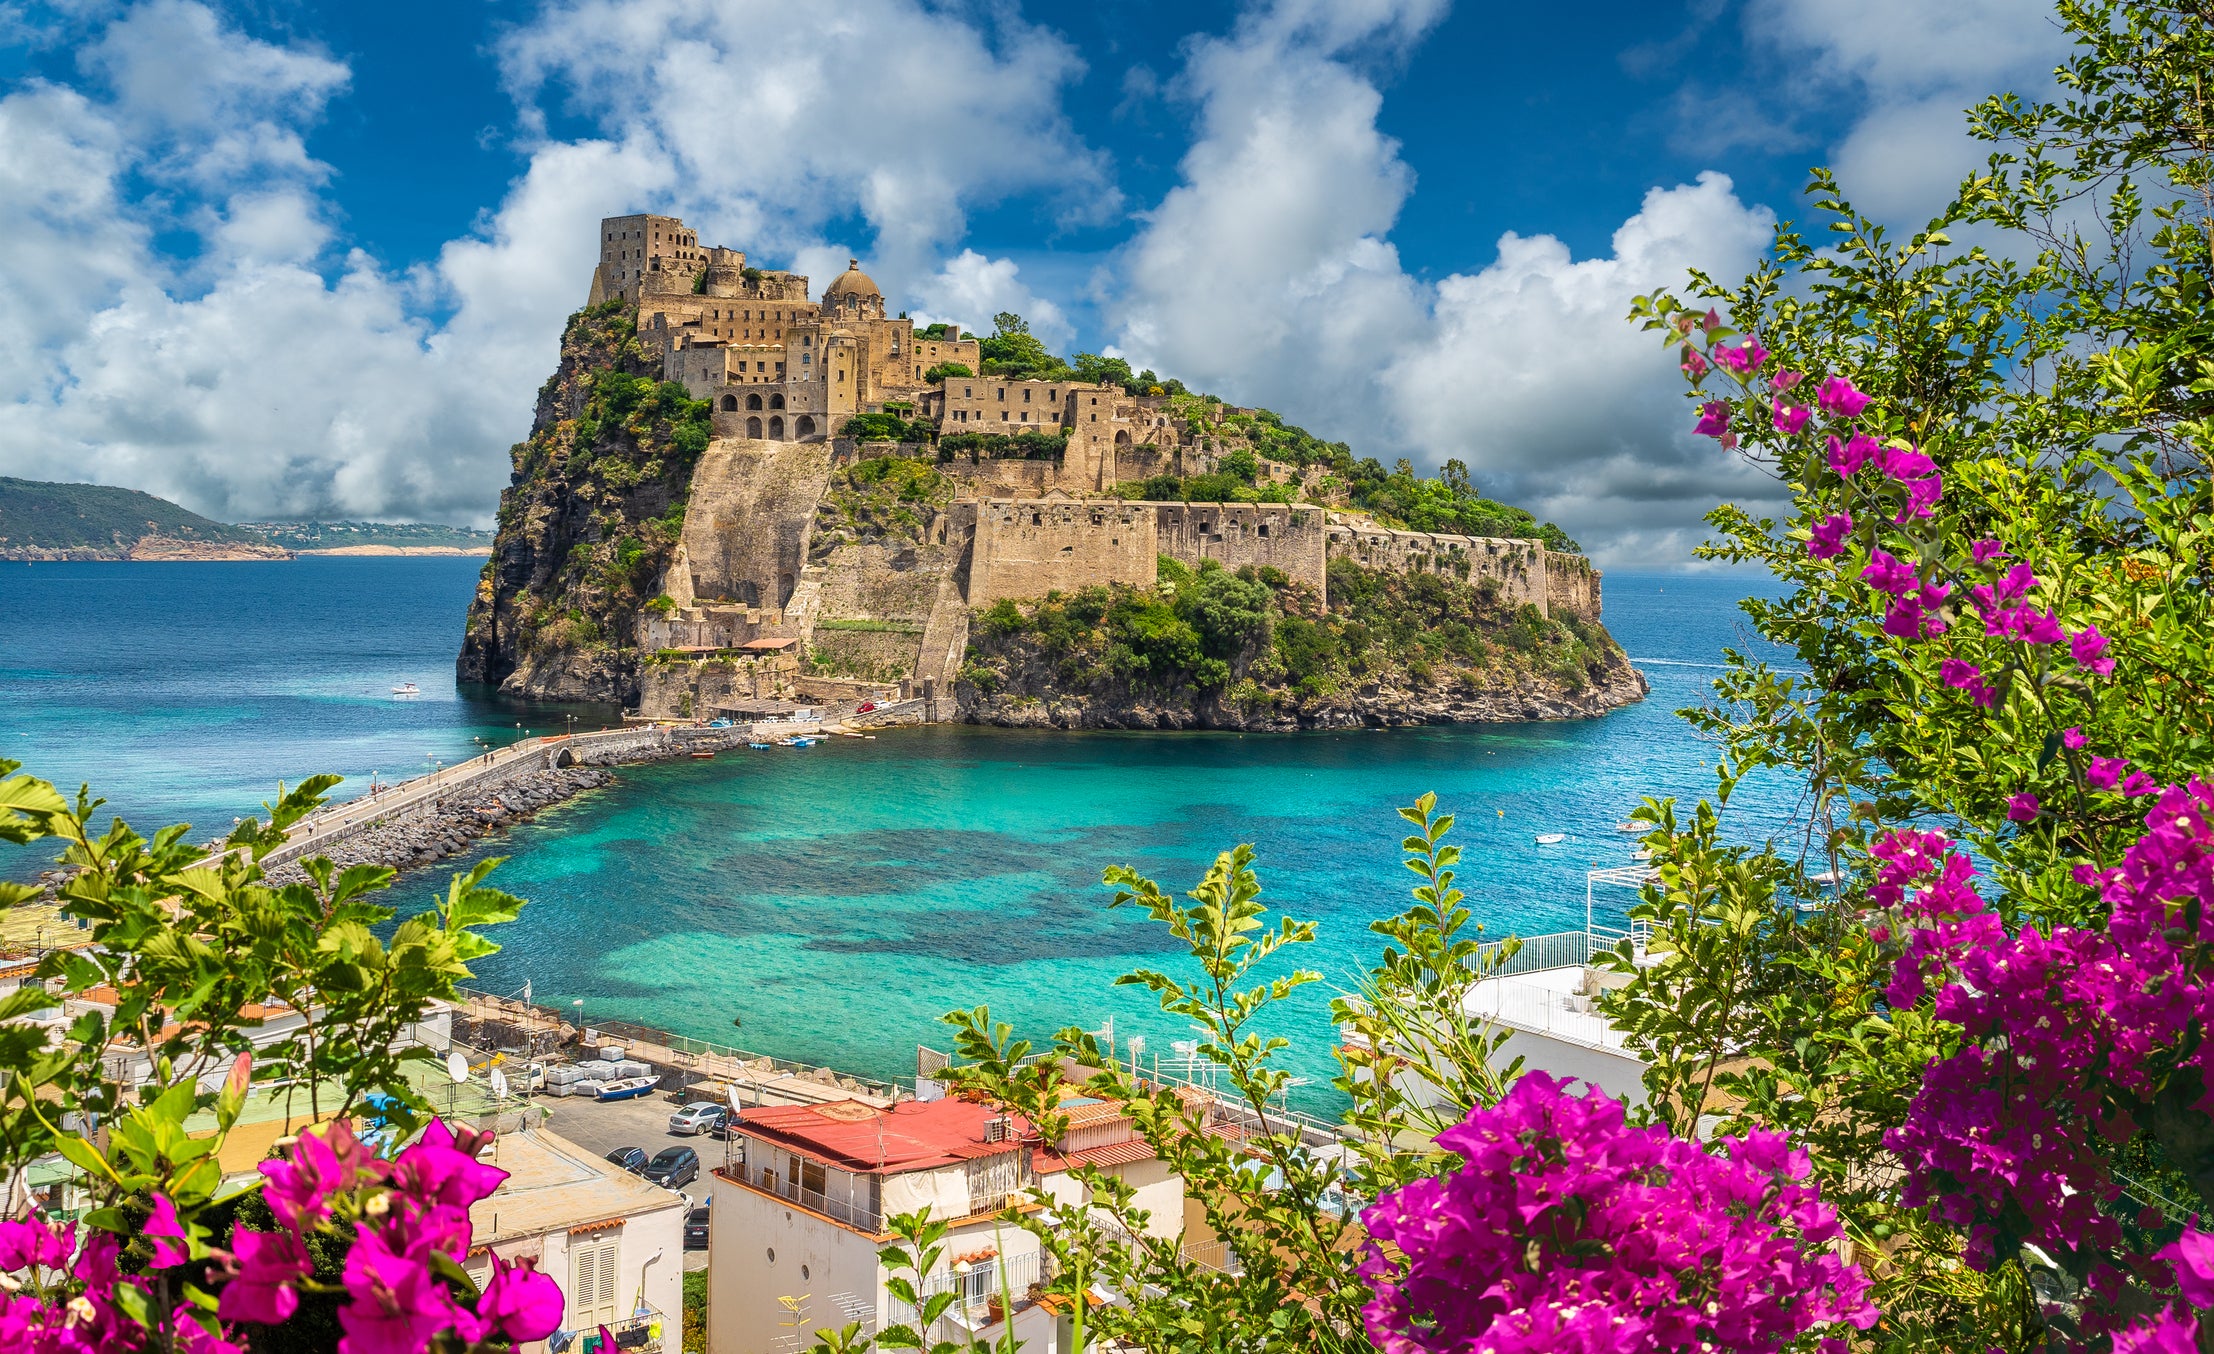 Get an Italian taste of spring on the volcanic island of Ischia